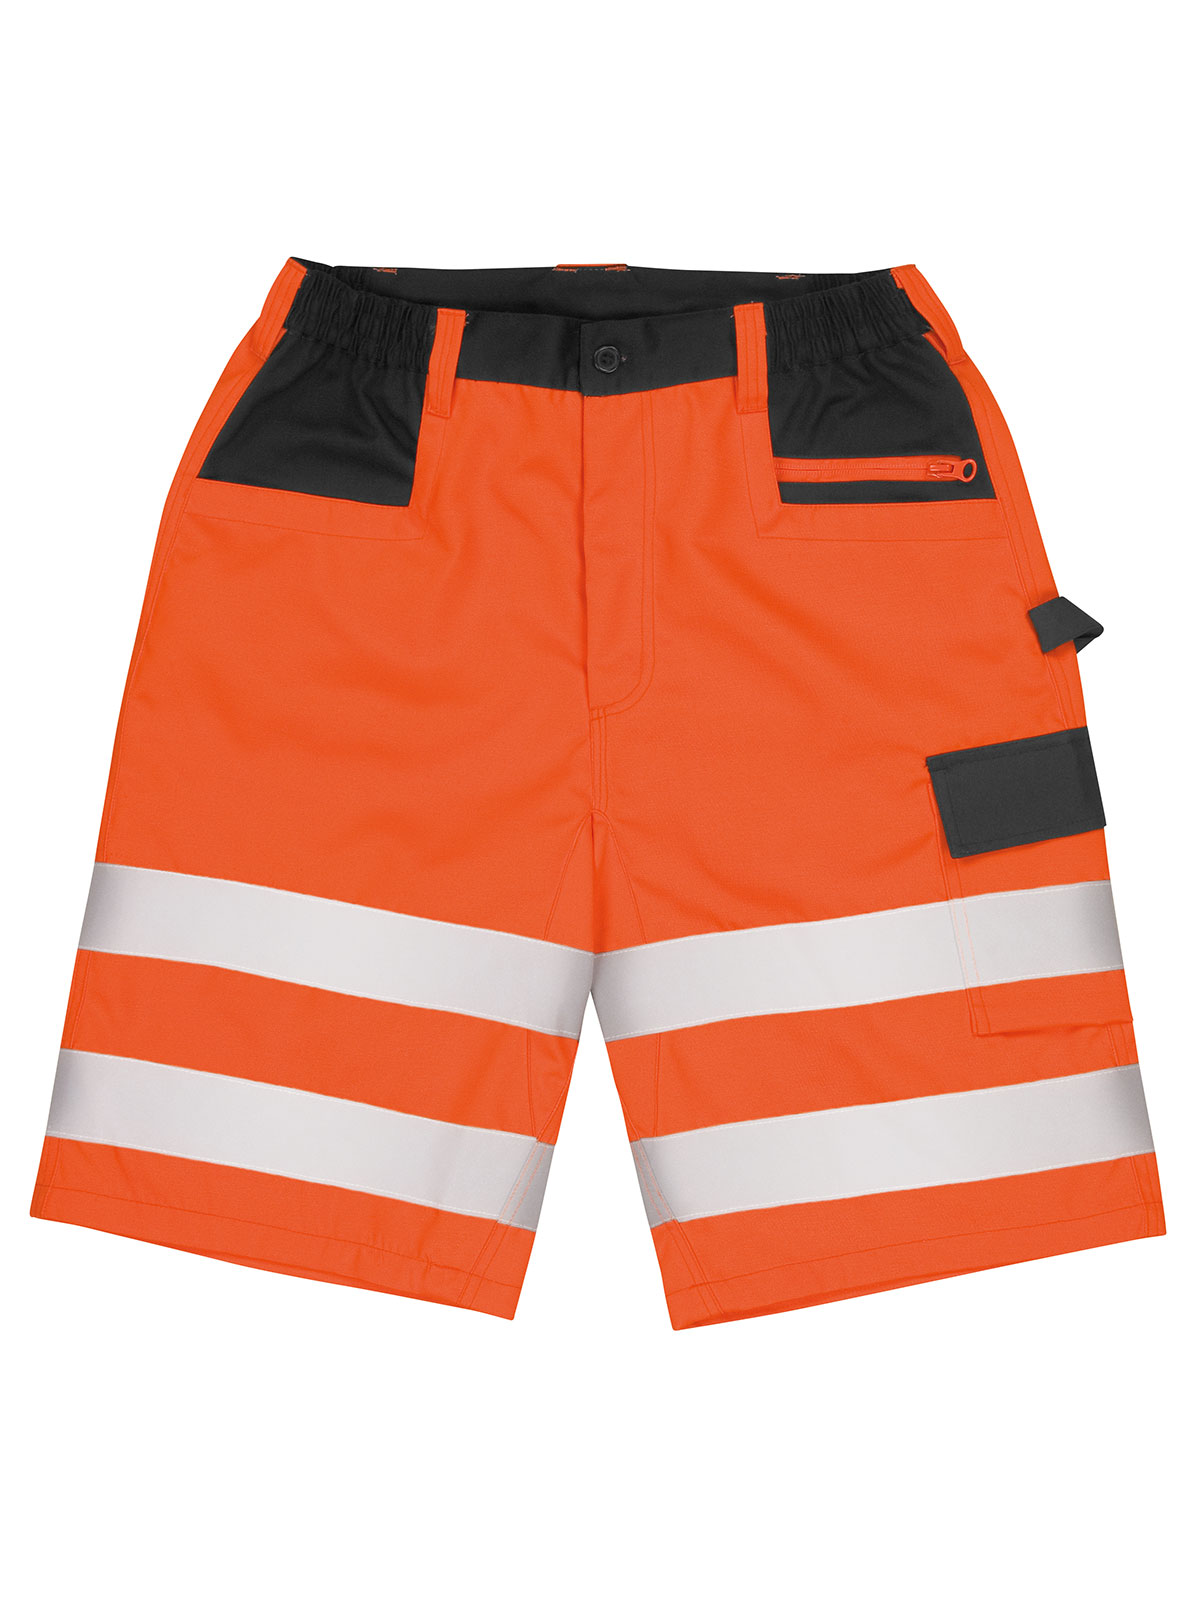 safety-cargo-shorts-oran.webp